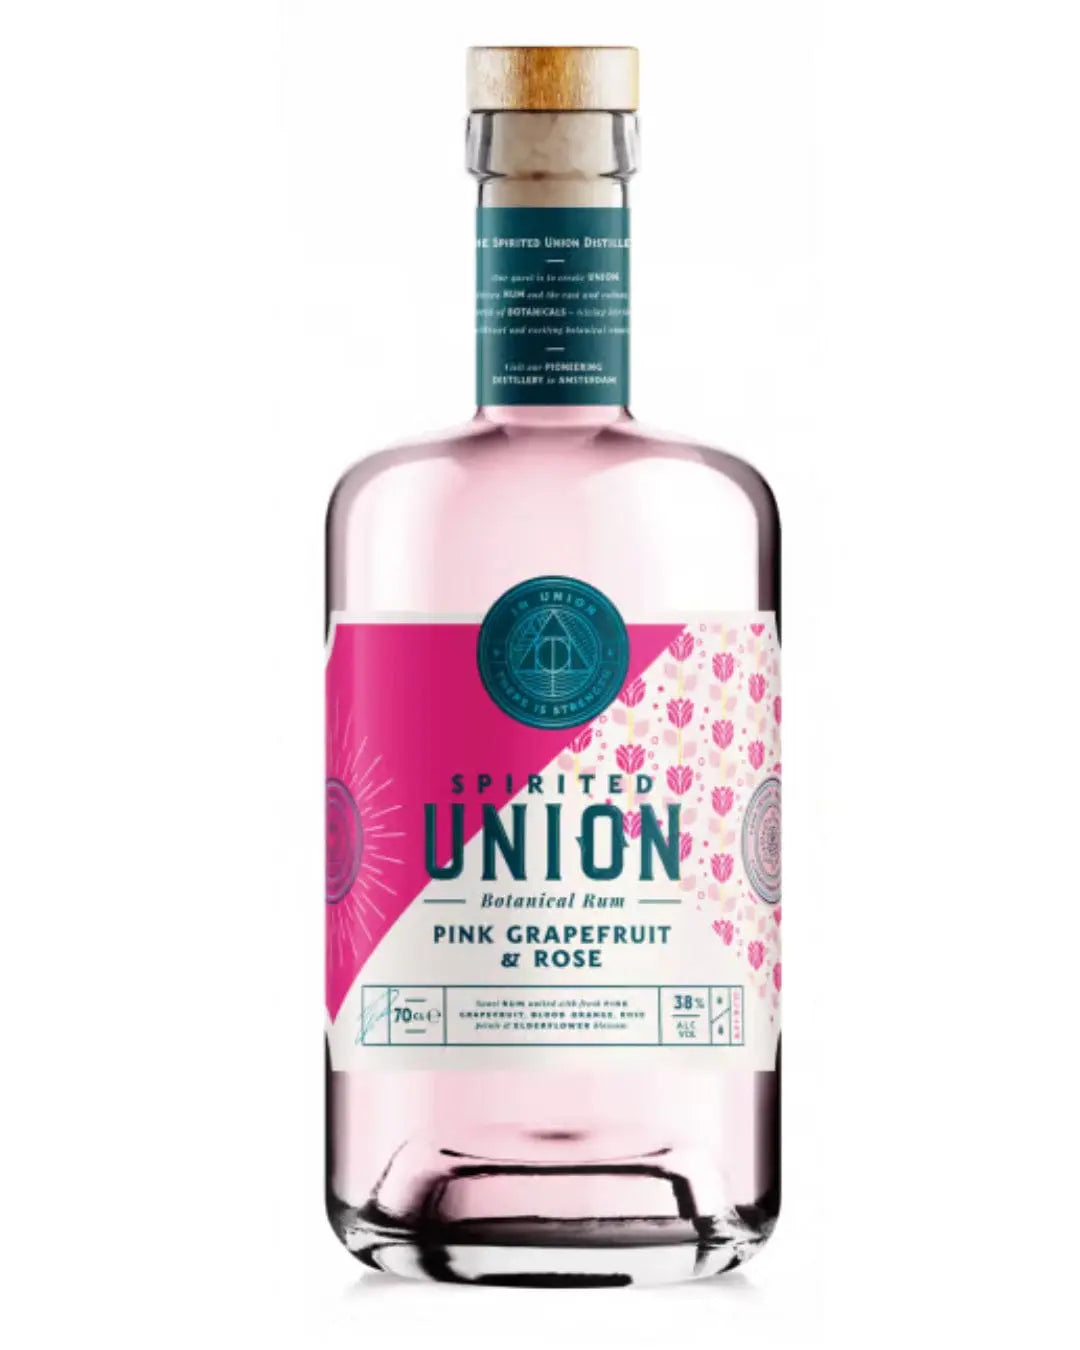 Spirited Union Pink Grapefruit and Rose Botanical Rum, 70 cl Rum